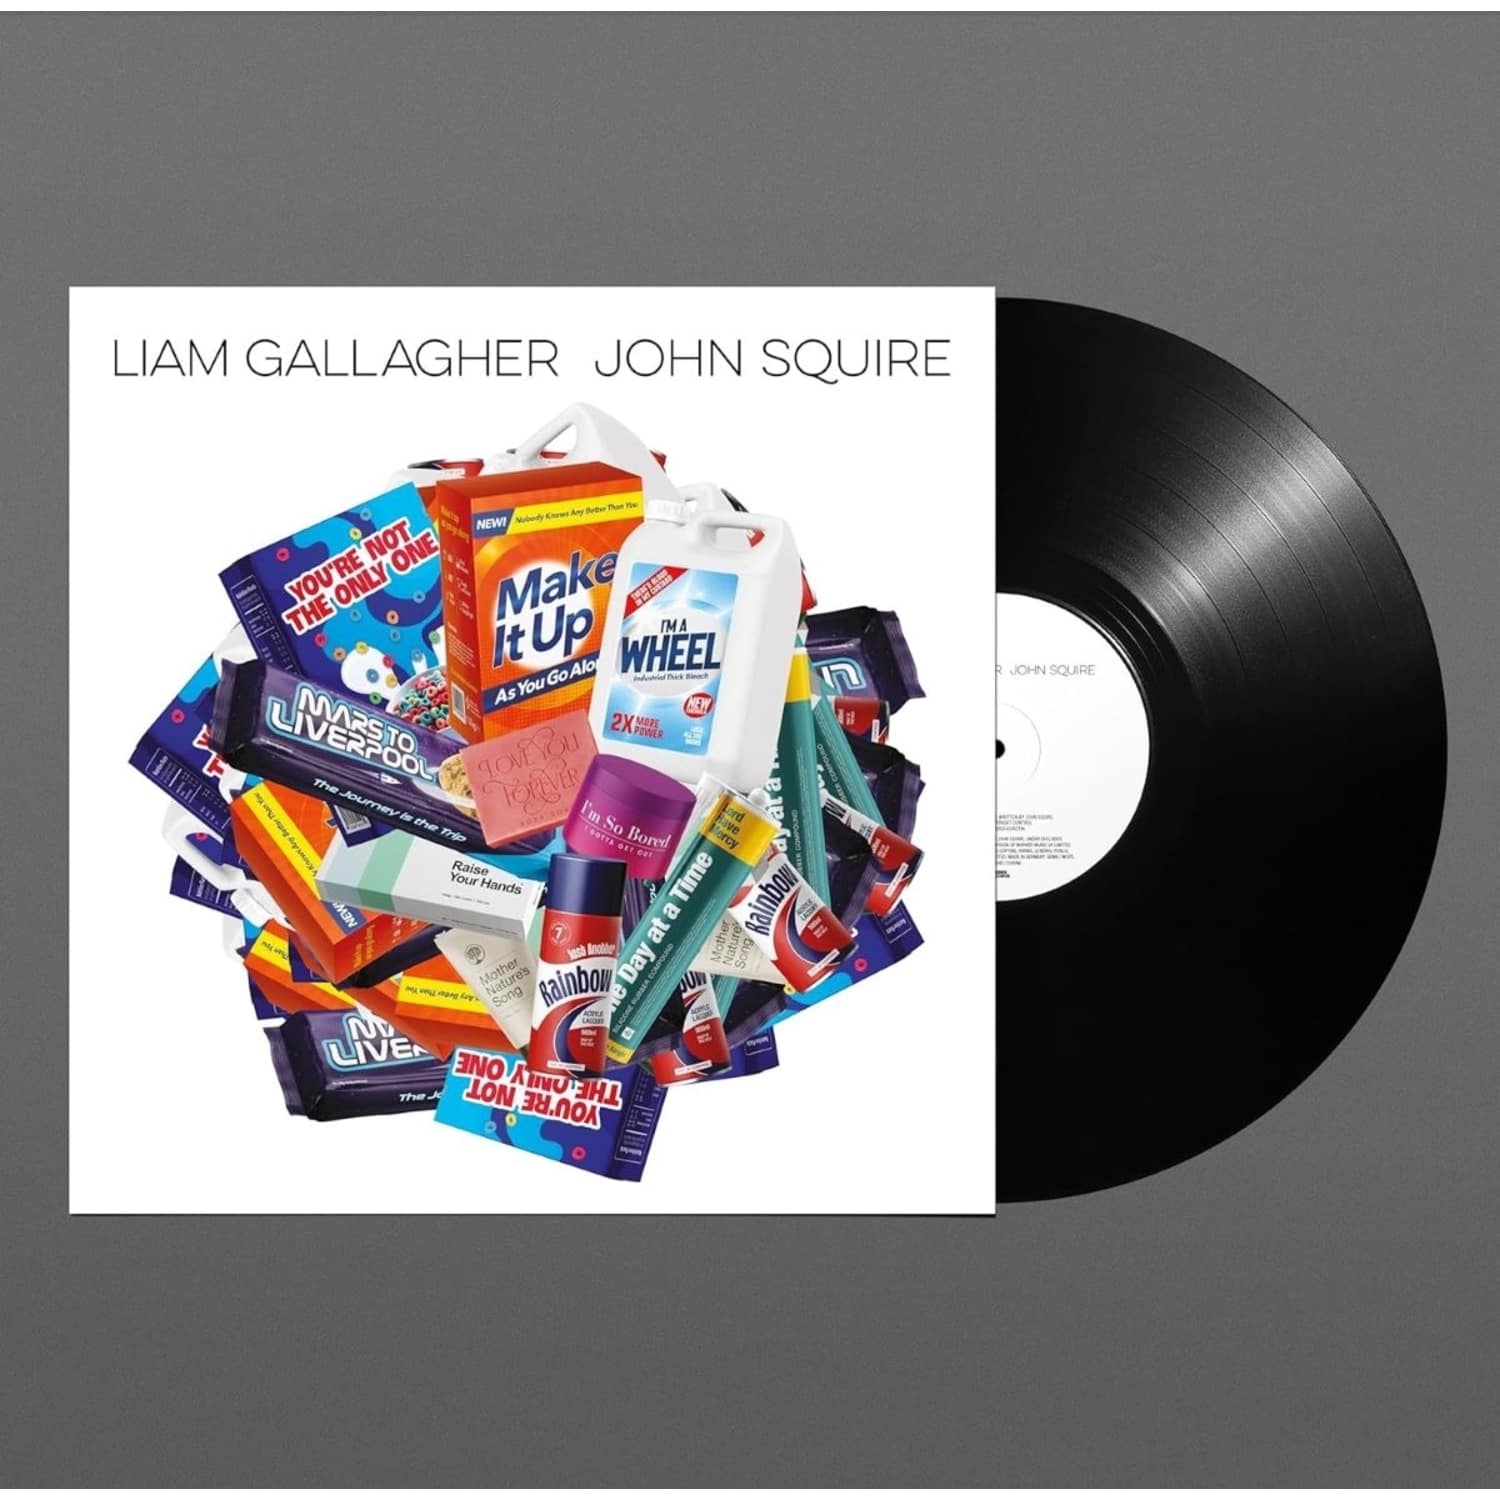 Liam Gallagher & John Squire - LIAM GALLAGHER&JOHN SQUIRE 